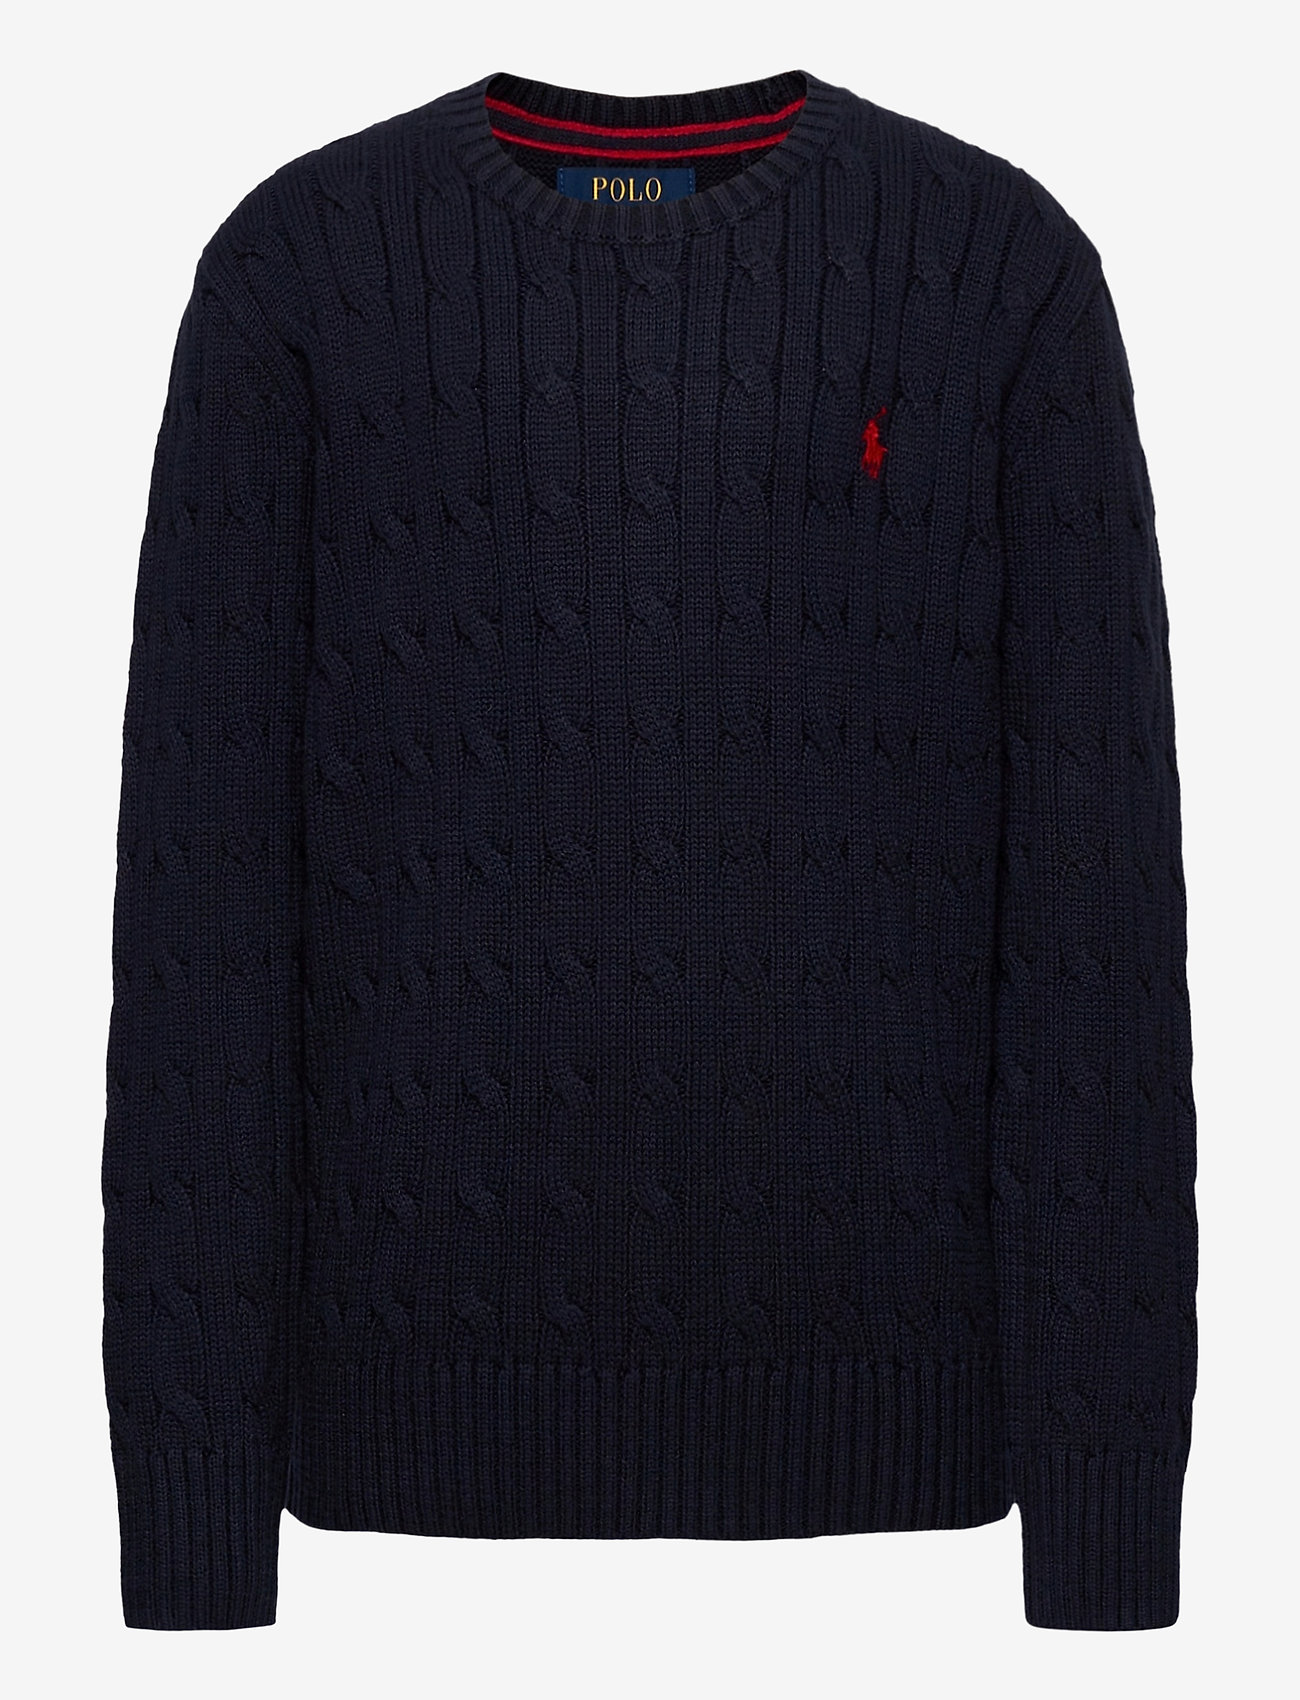 Ralph Lauren Kids - Cable-Knit Cotton Sweater - rl navy - 0